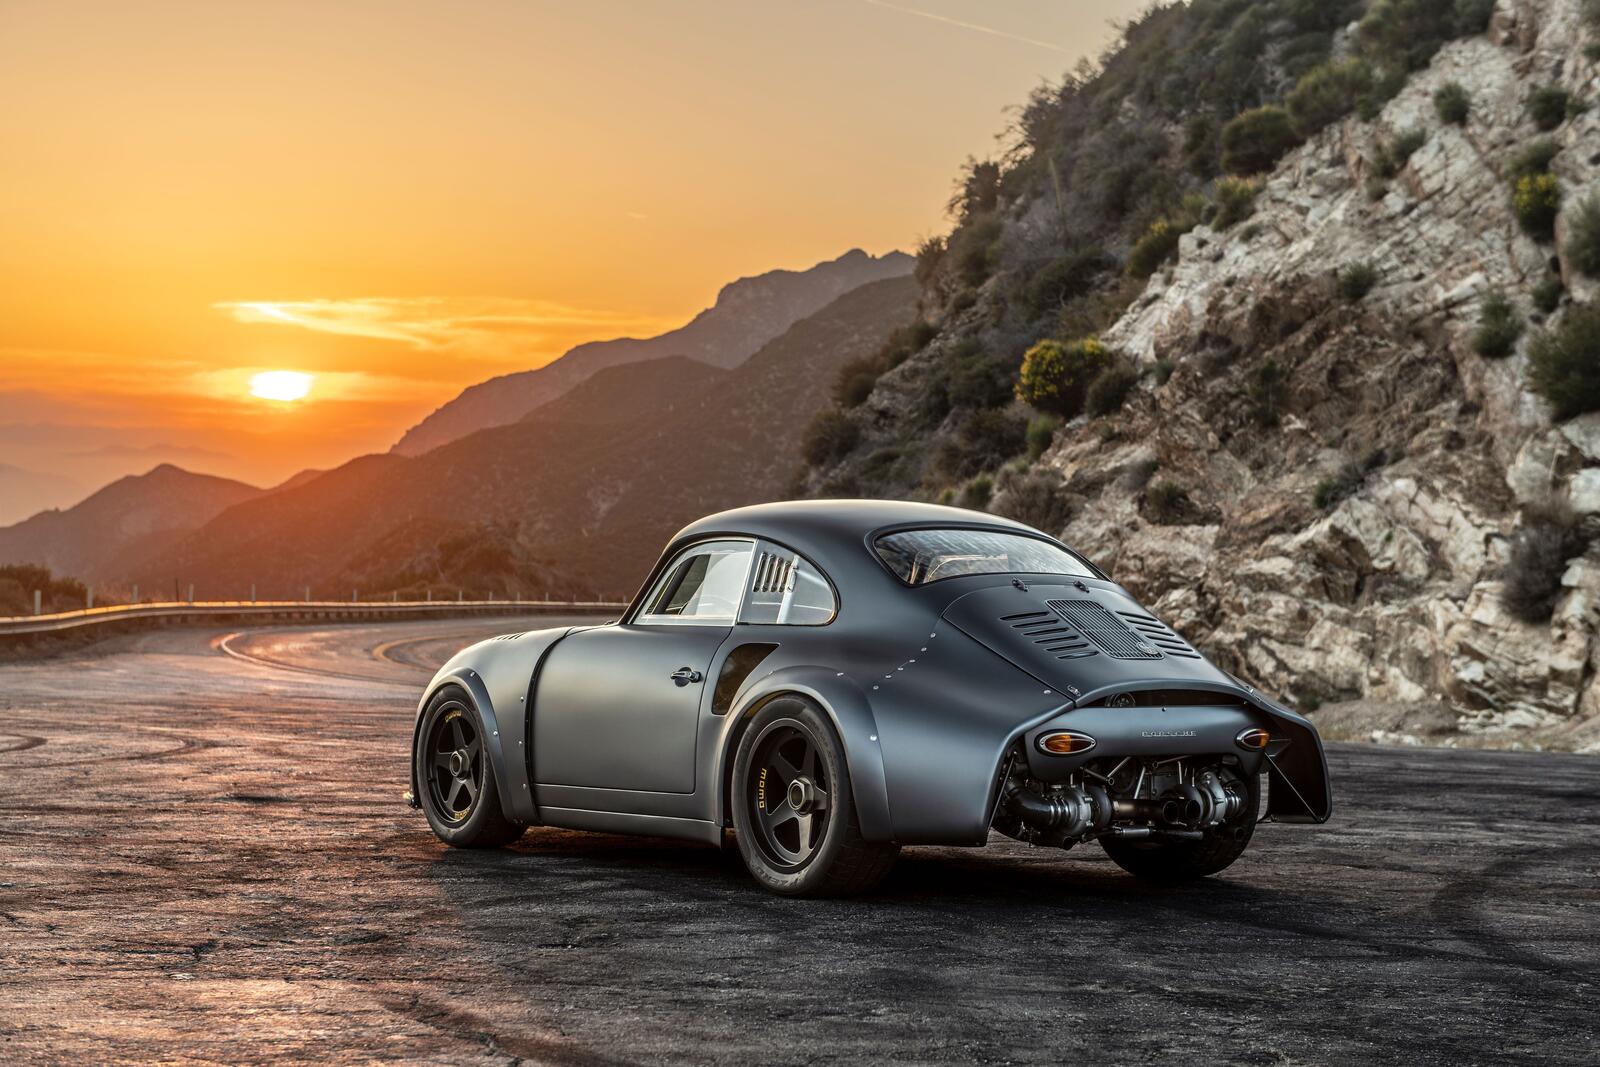 Free photo A vintage matte gray Porsche at sunset